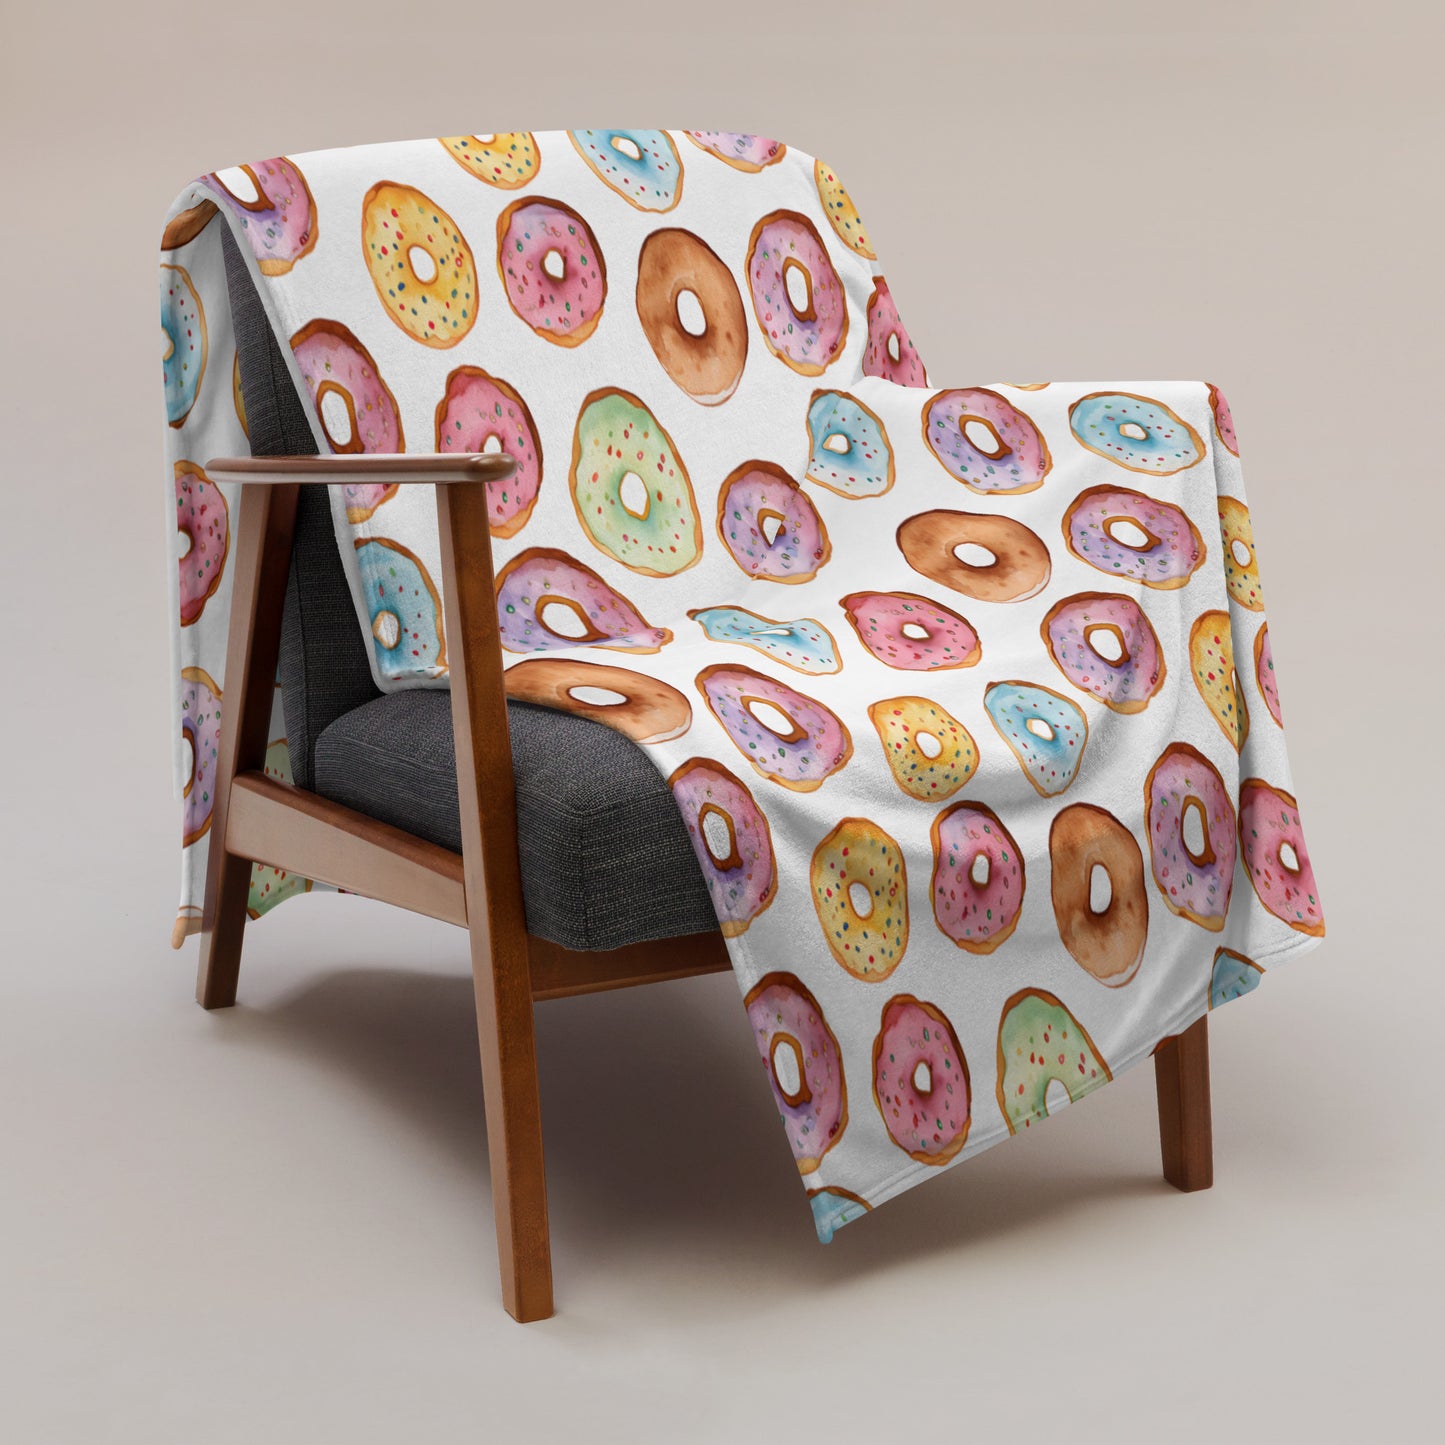 15x Seamless Donuts Pattern Designs | Digital download